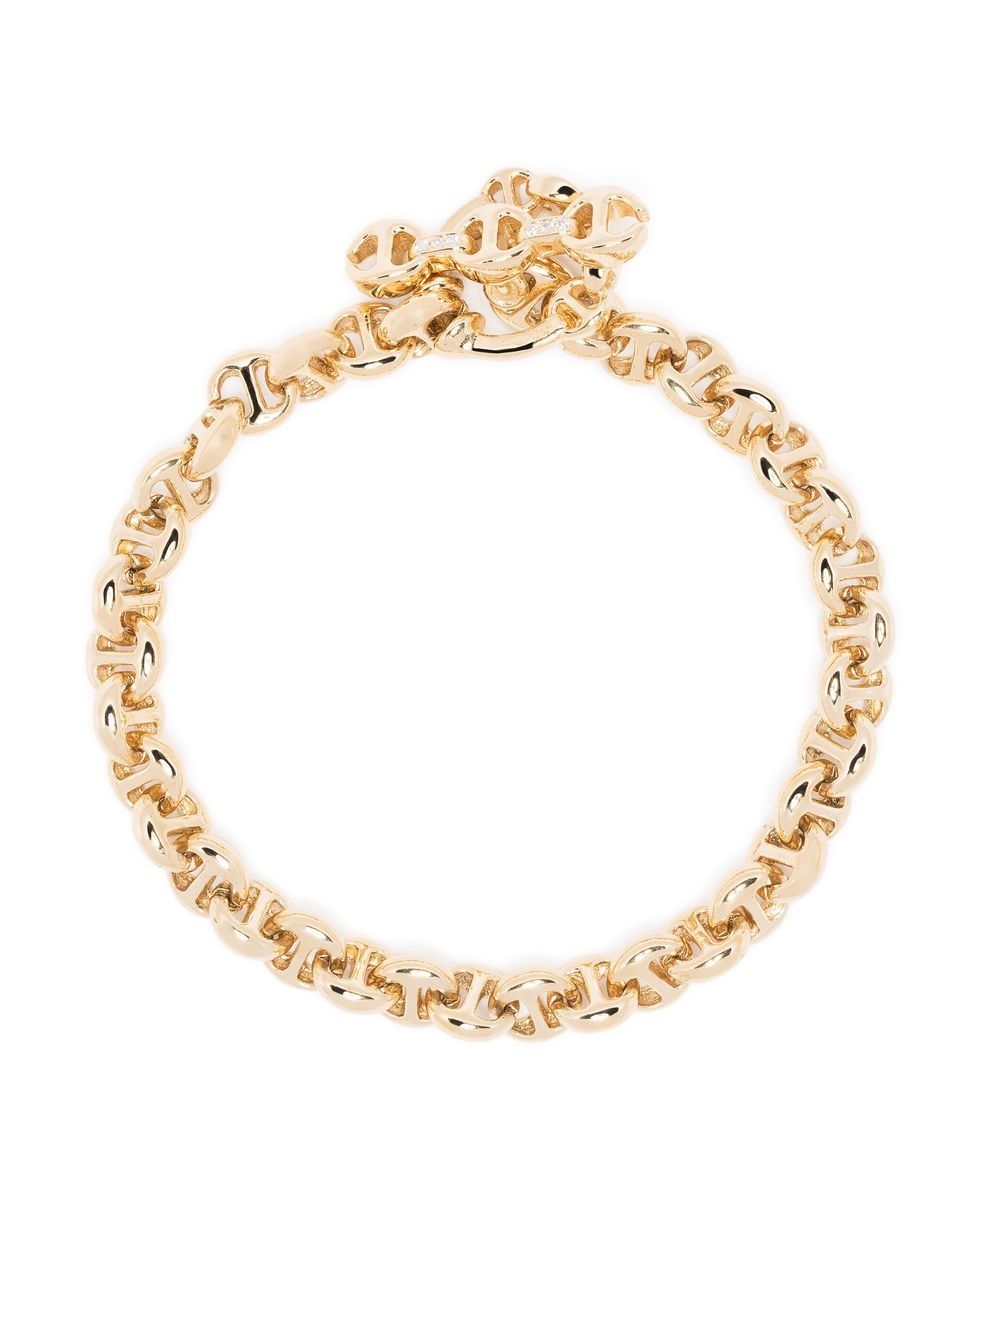 HOORSENBUHS 18kt yellow gold chain link bracelet von HOORSENBUHS